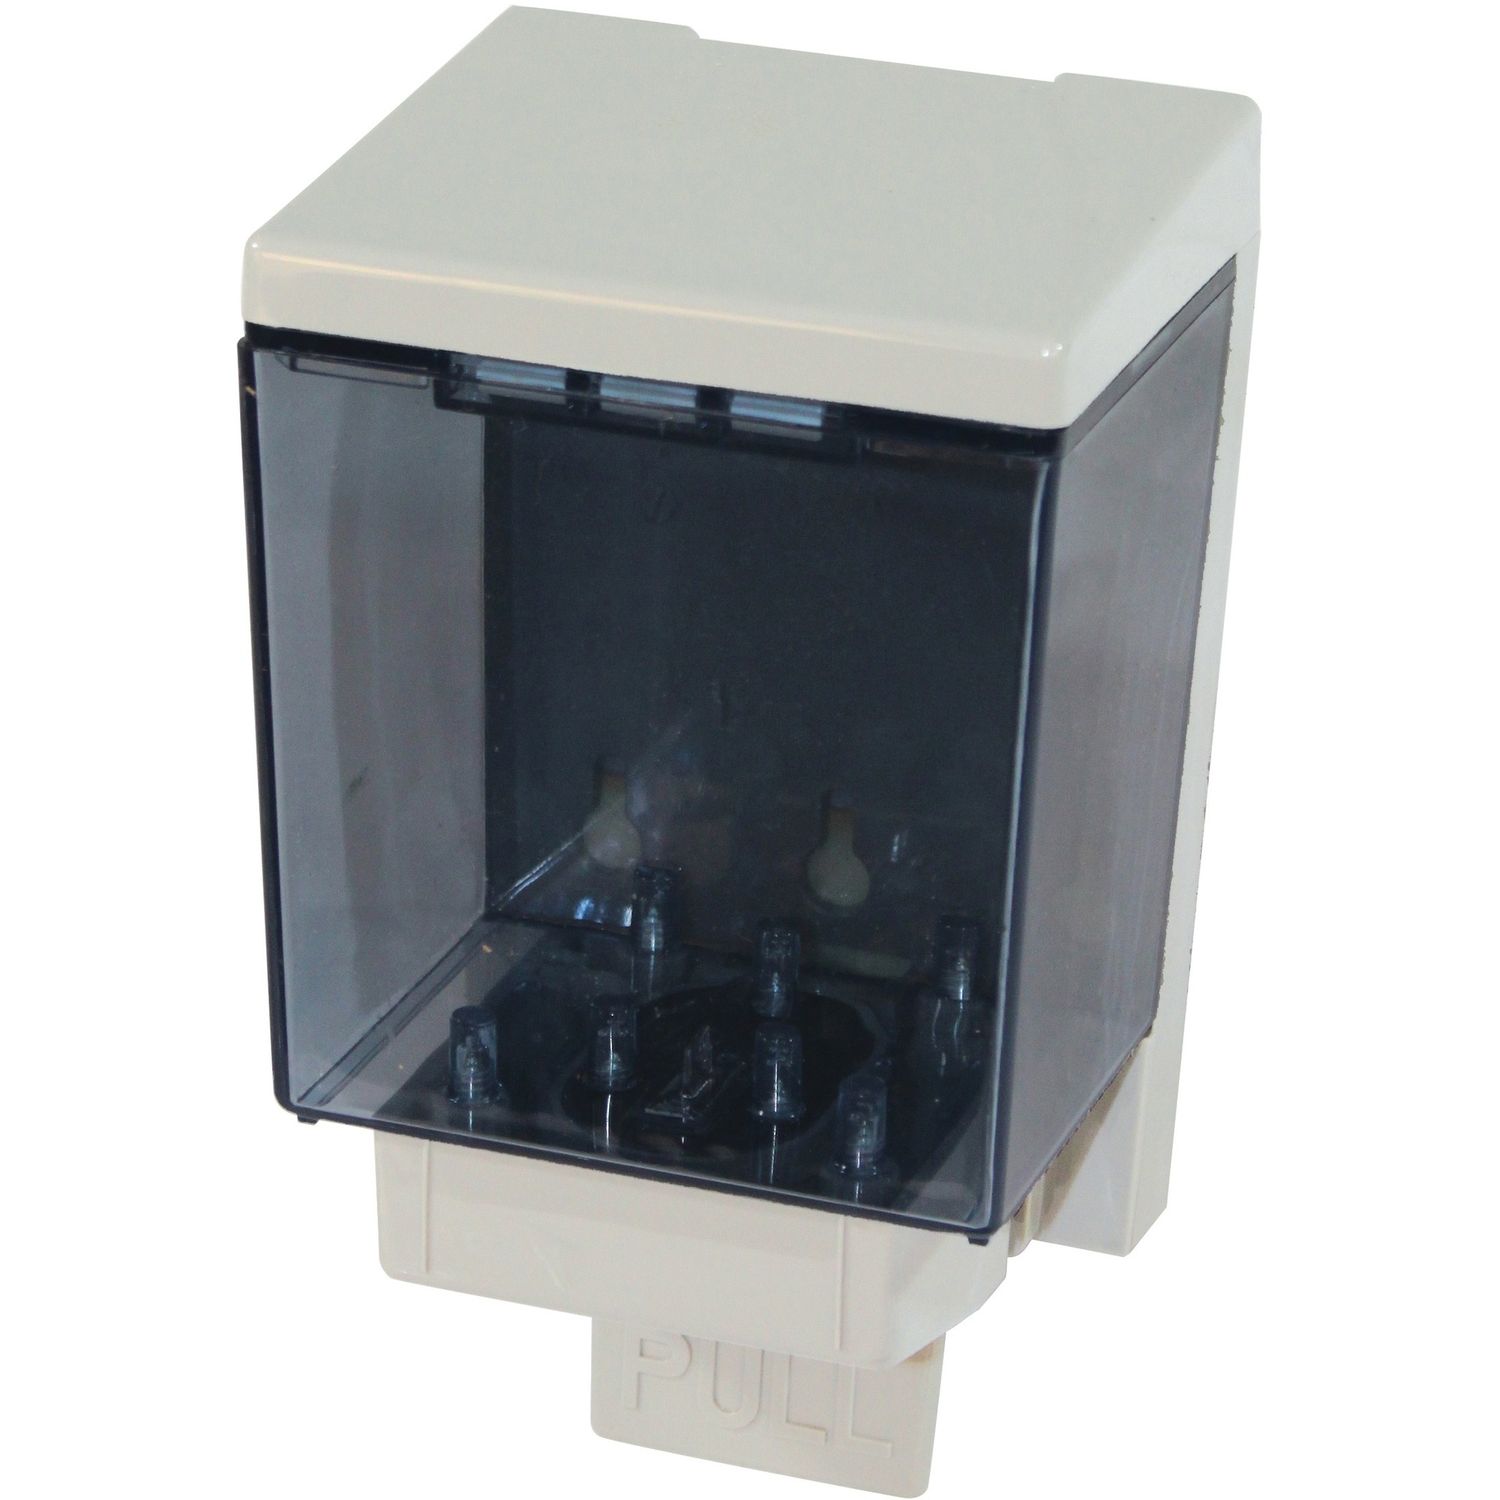 Deluxe Tank Soap Dispenser Manual, 1.13 quart Capacity, Tan